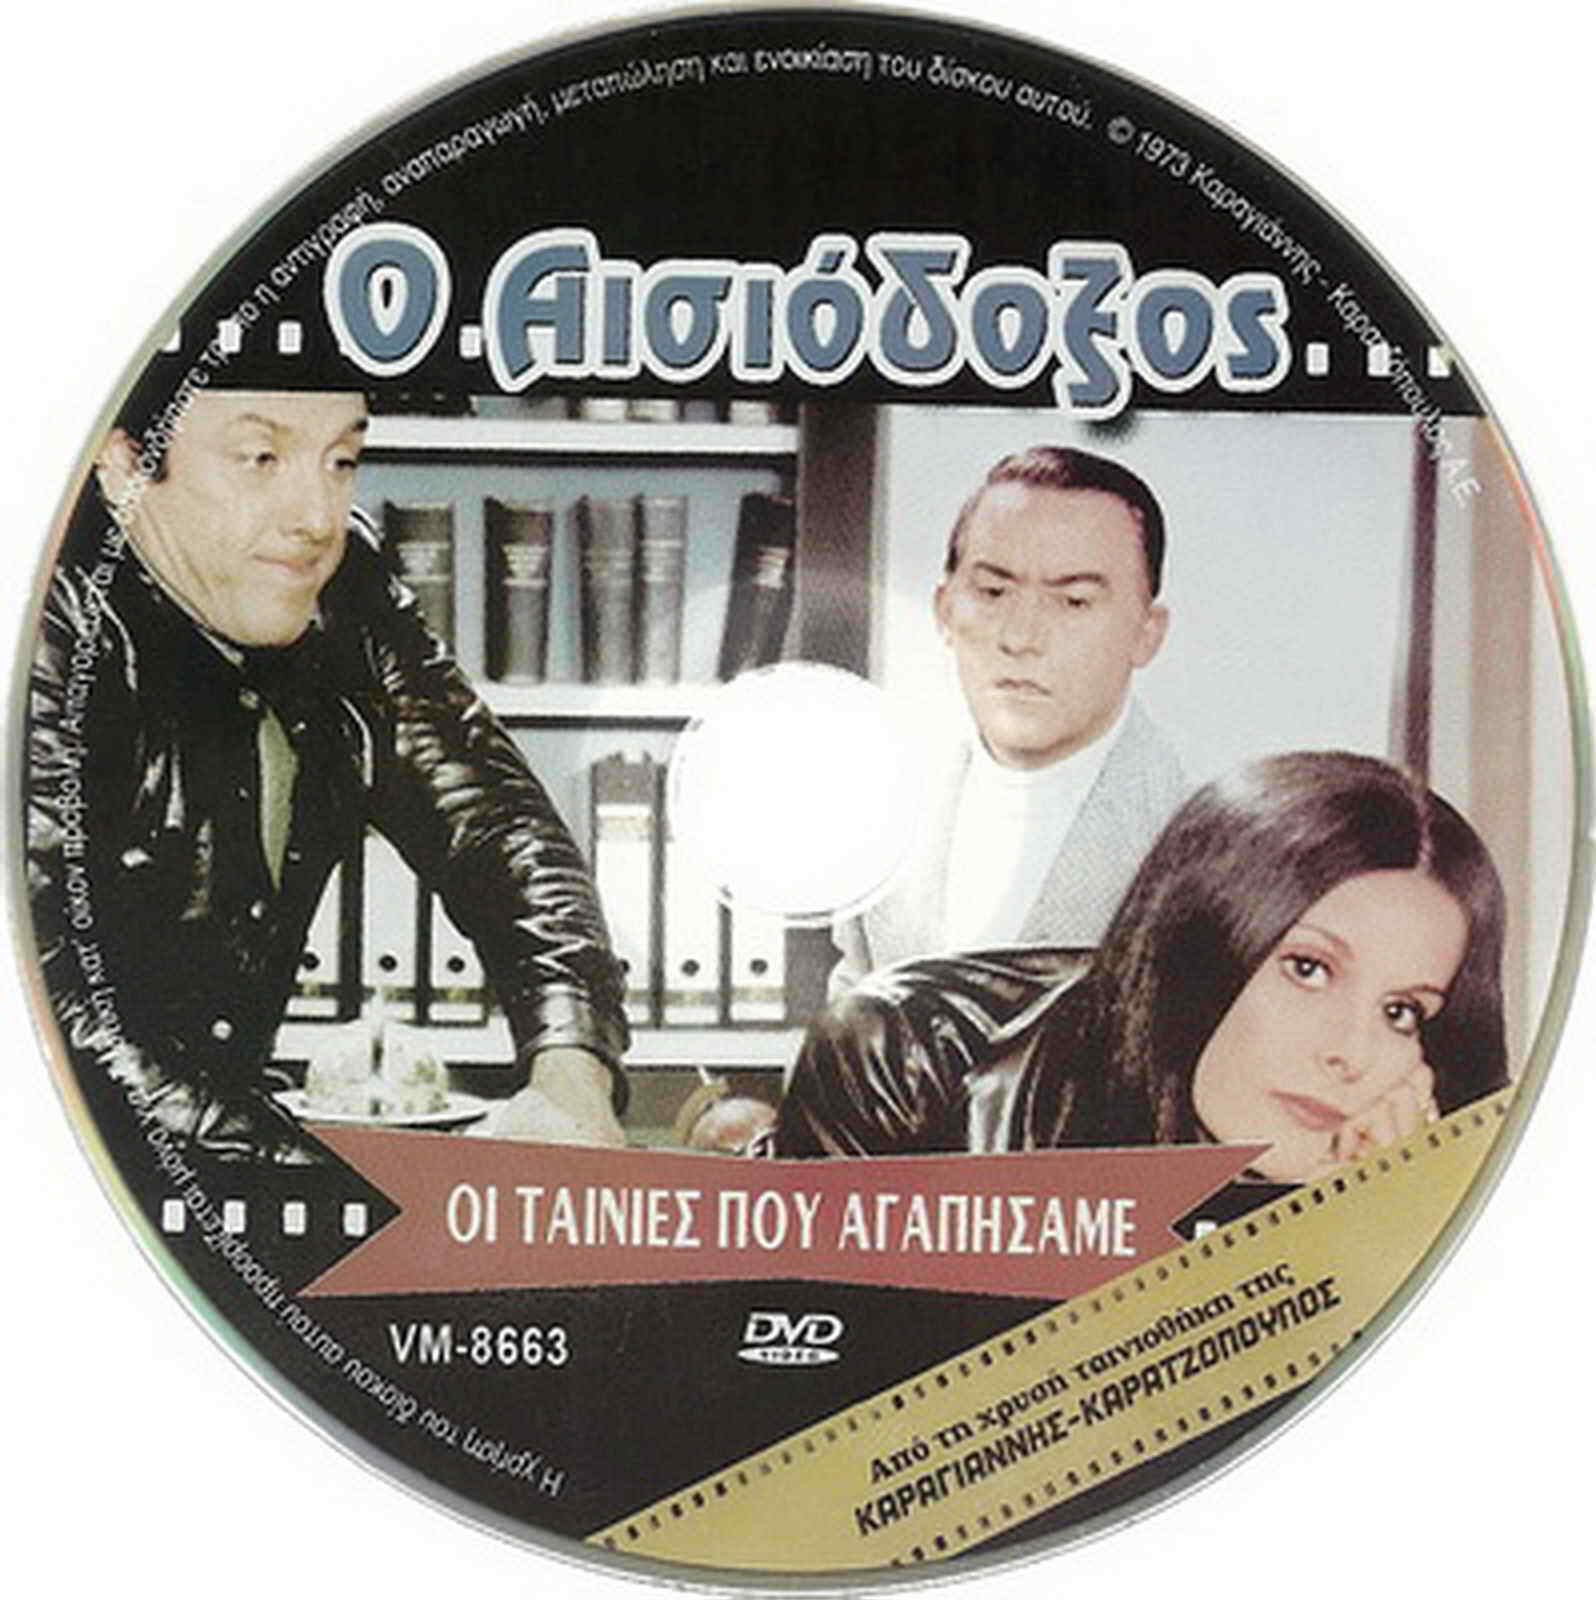 Primary image for O AISIODOXOS (Kostas Voutsas)[Region 2 DVD]